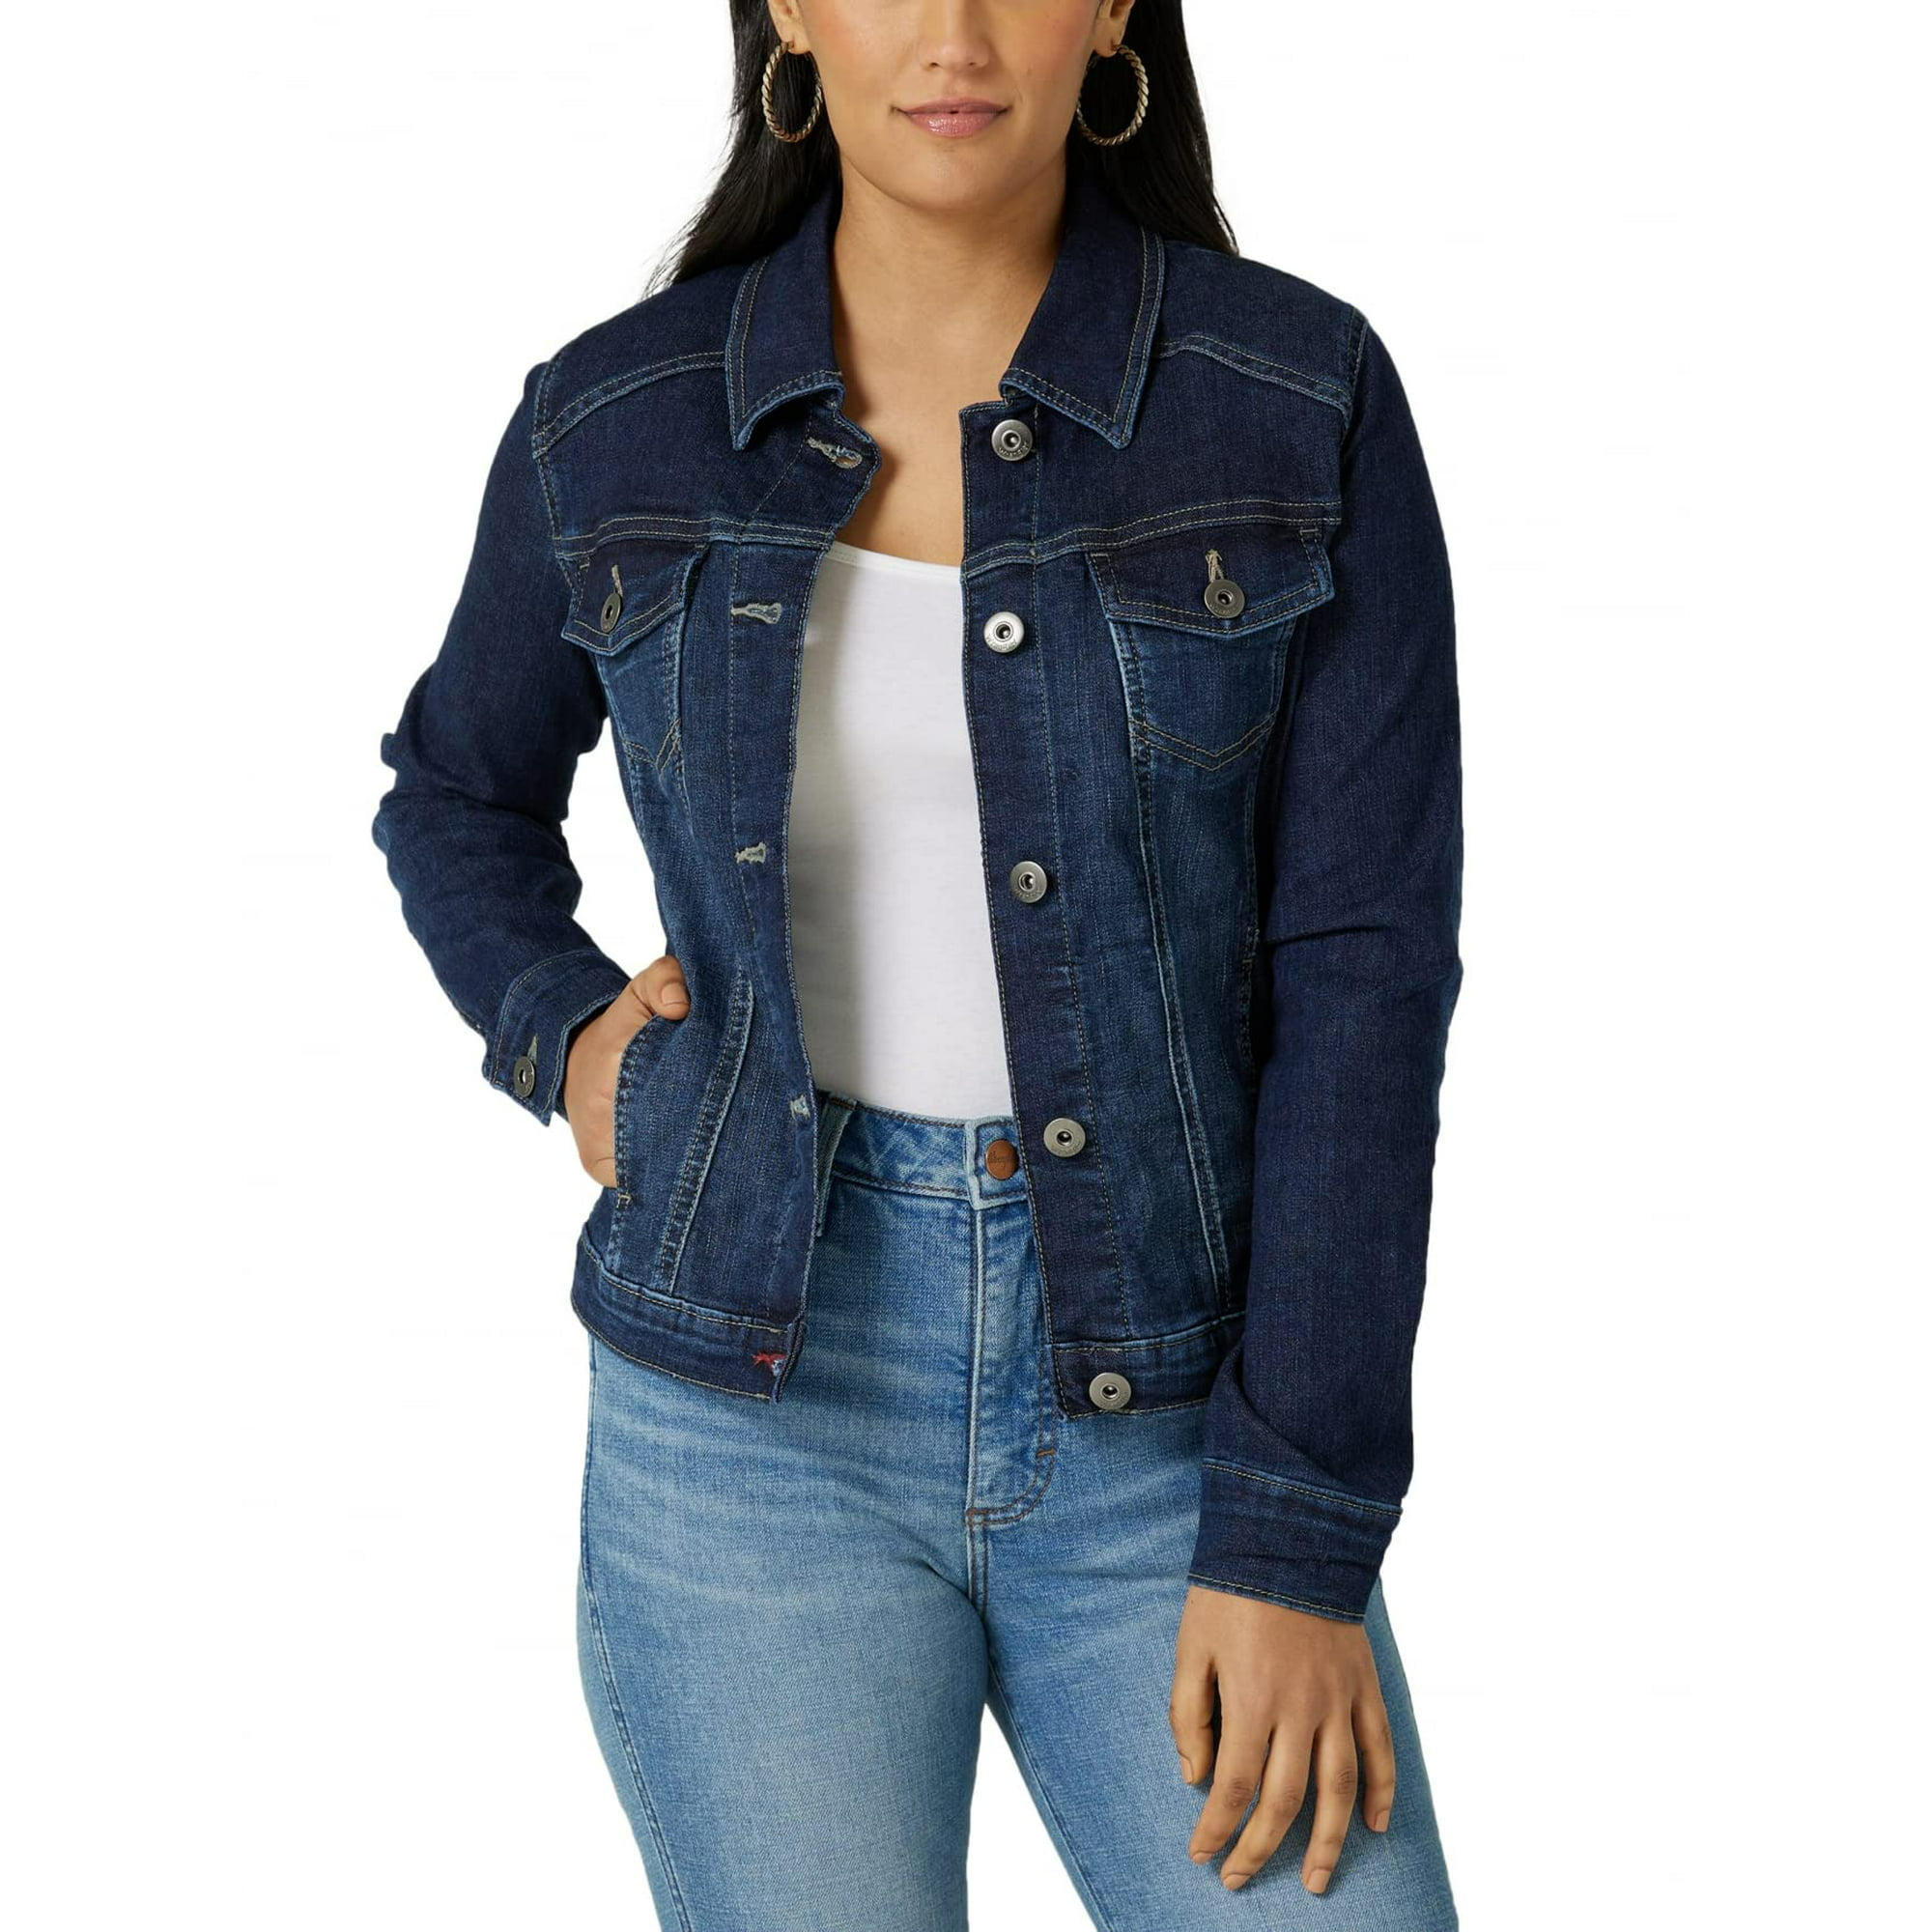 Wrangler Authentics Women's Denim Jacket, Drenched, X-Large | Walmart Canada